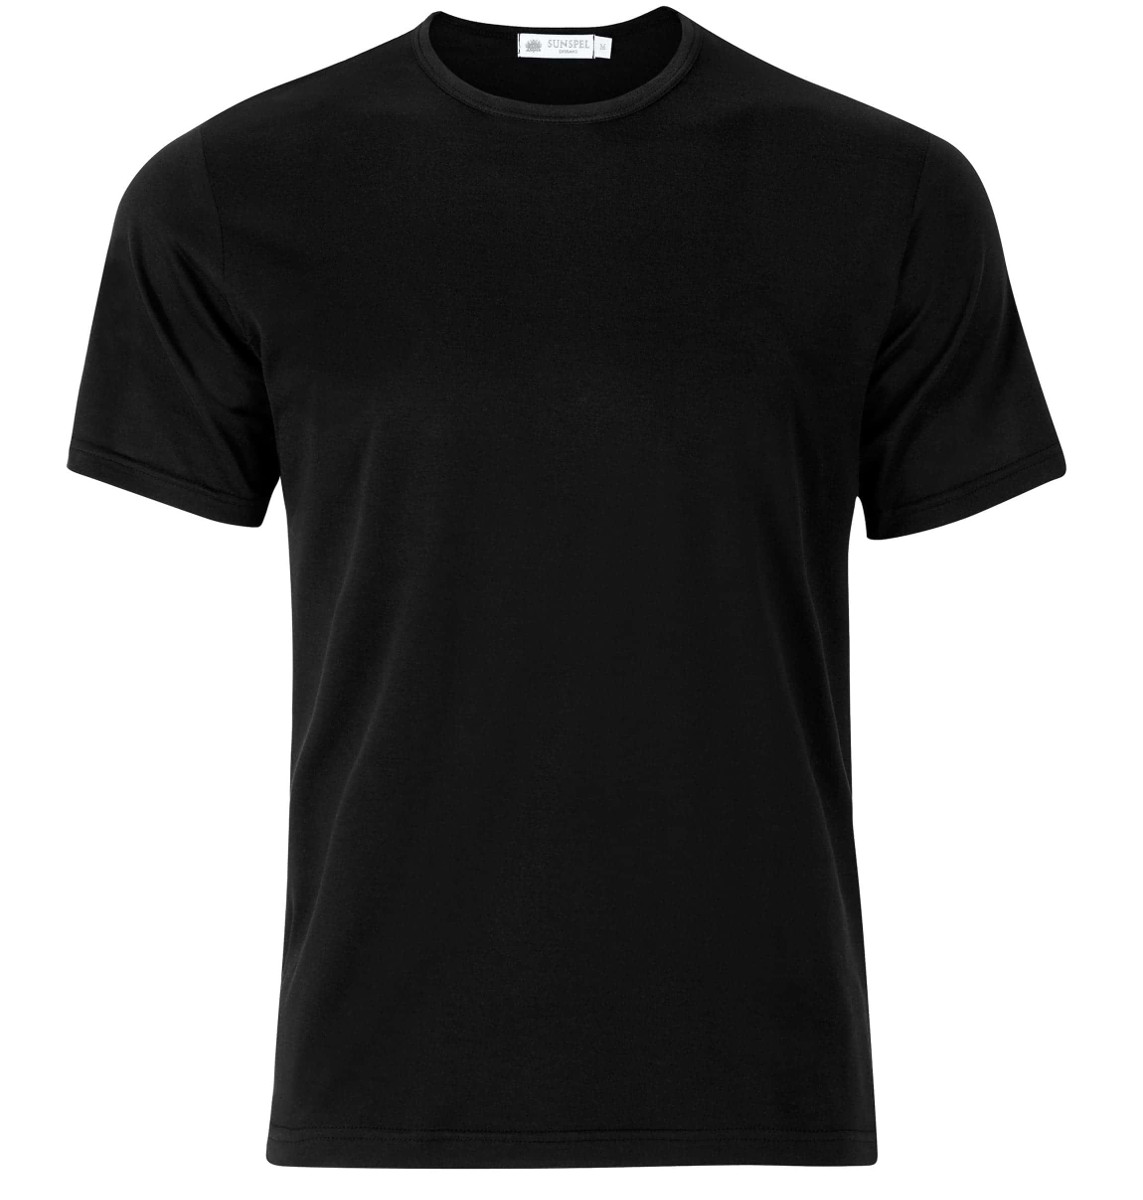 Apparel :: Men's Clothing :: T-shirt, Color: Black